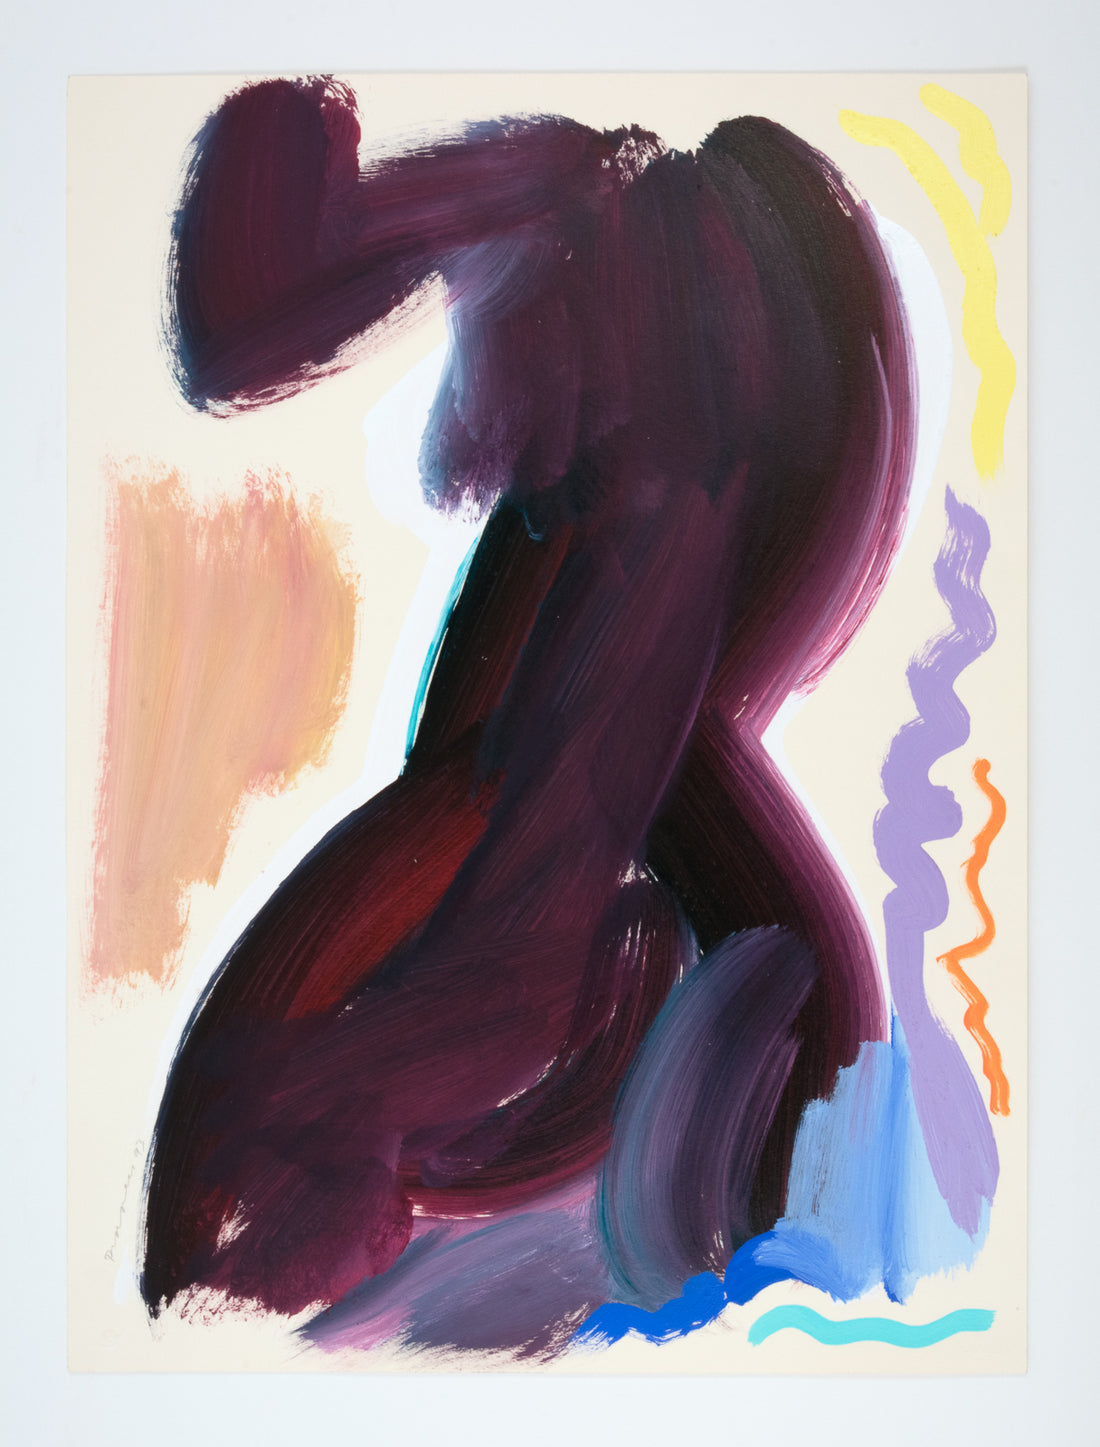 Joseph Drapell "Untitled," 1993, acrylic on paper